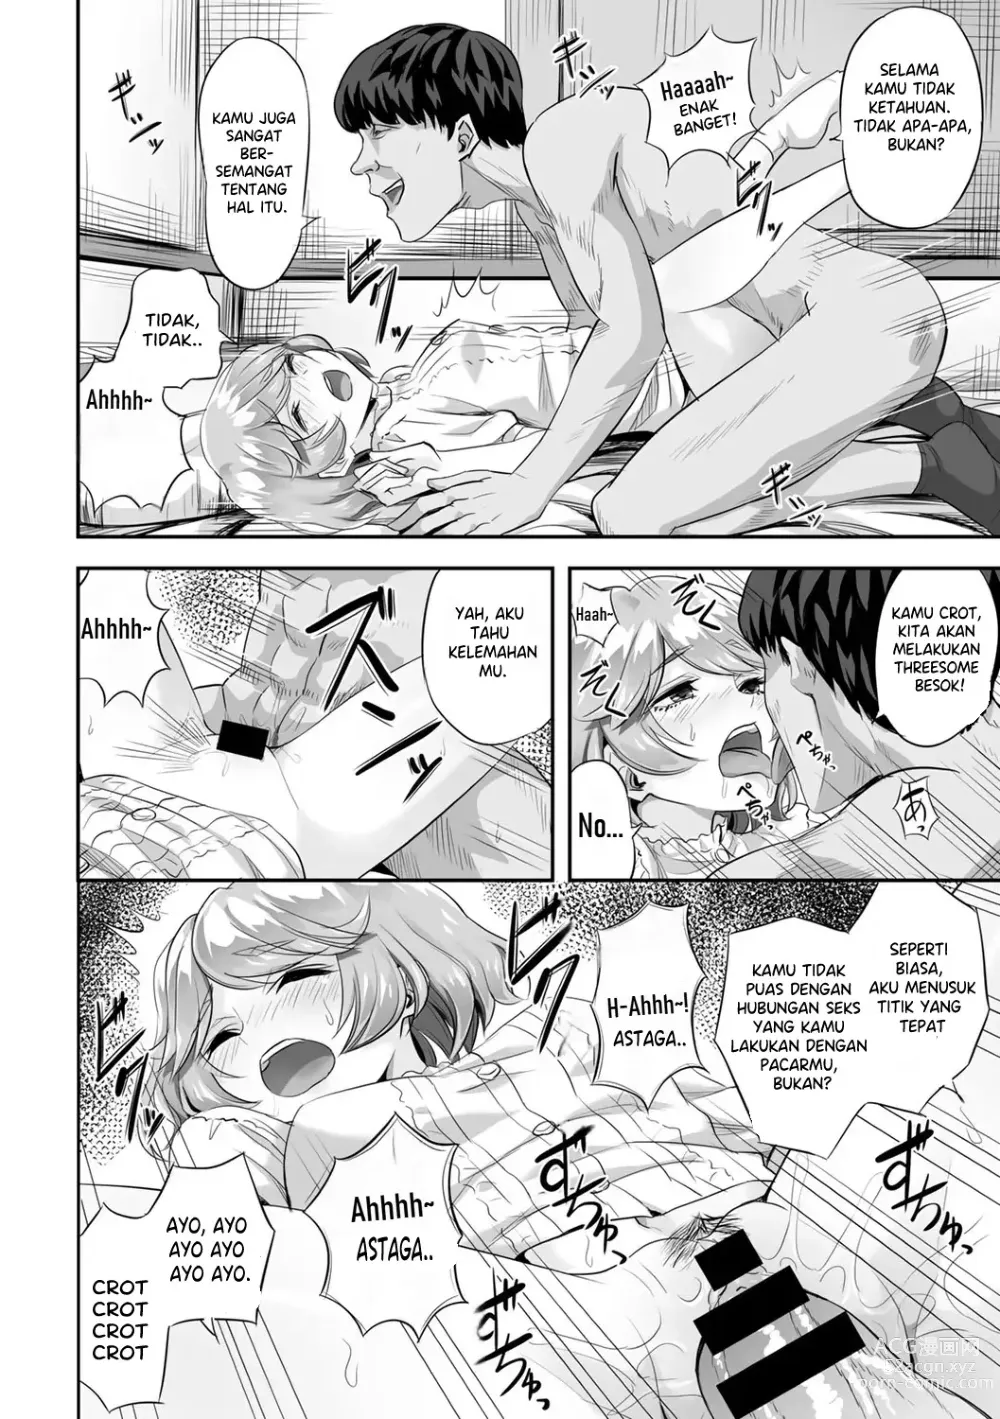 Page 10 of manga Kimi no Koe o Kinagara - While listening to your voice...